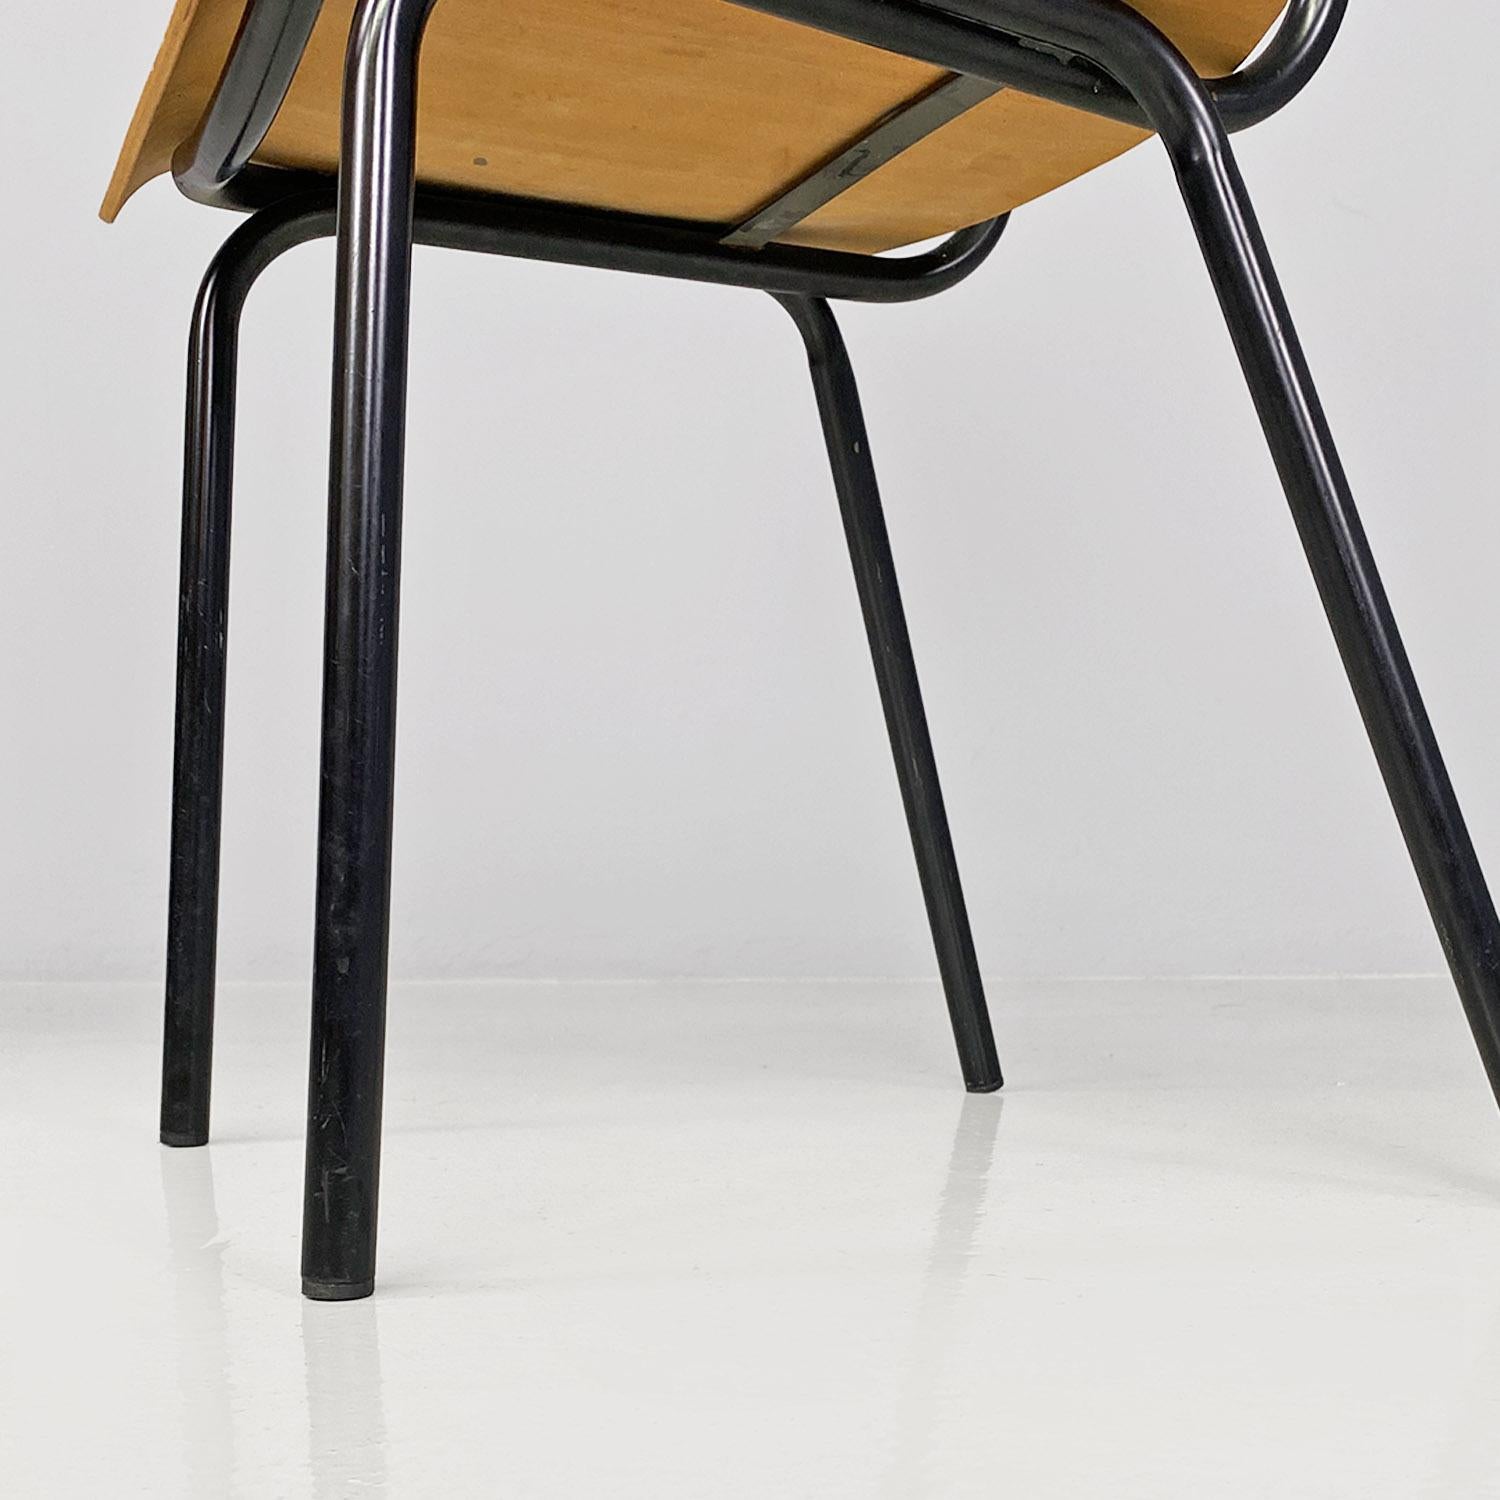 Italian mid-century modern beech and black tubolar metal school chairs, 1960s For Sale 7